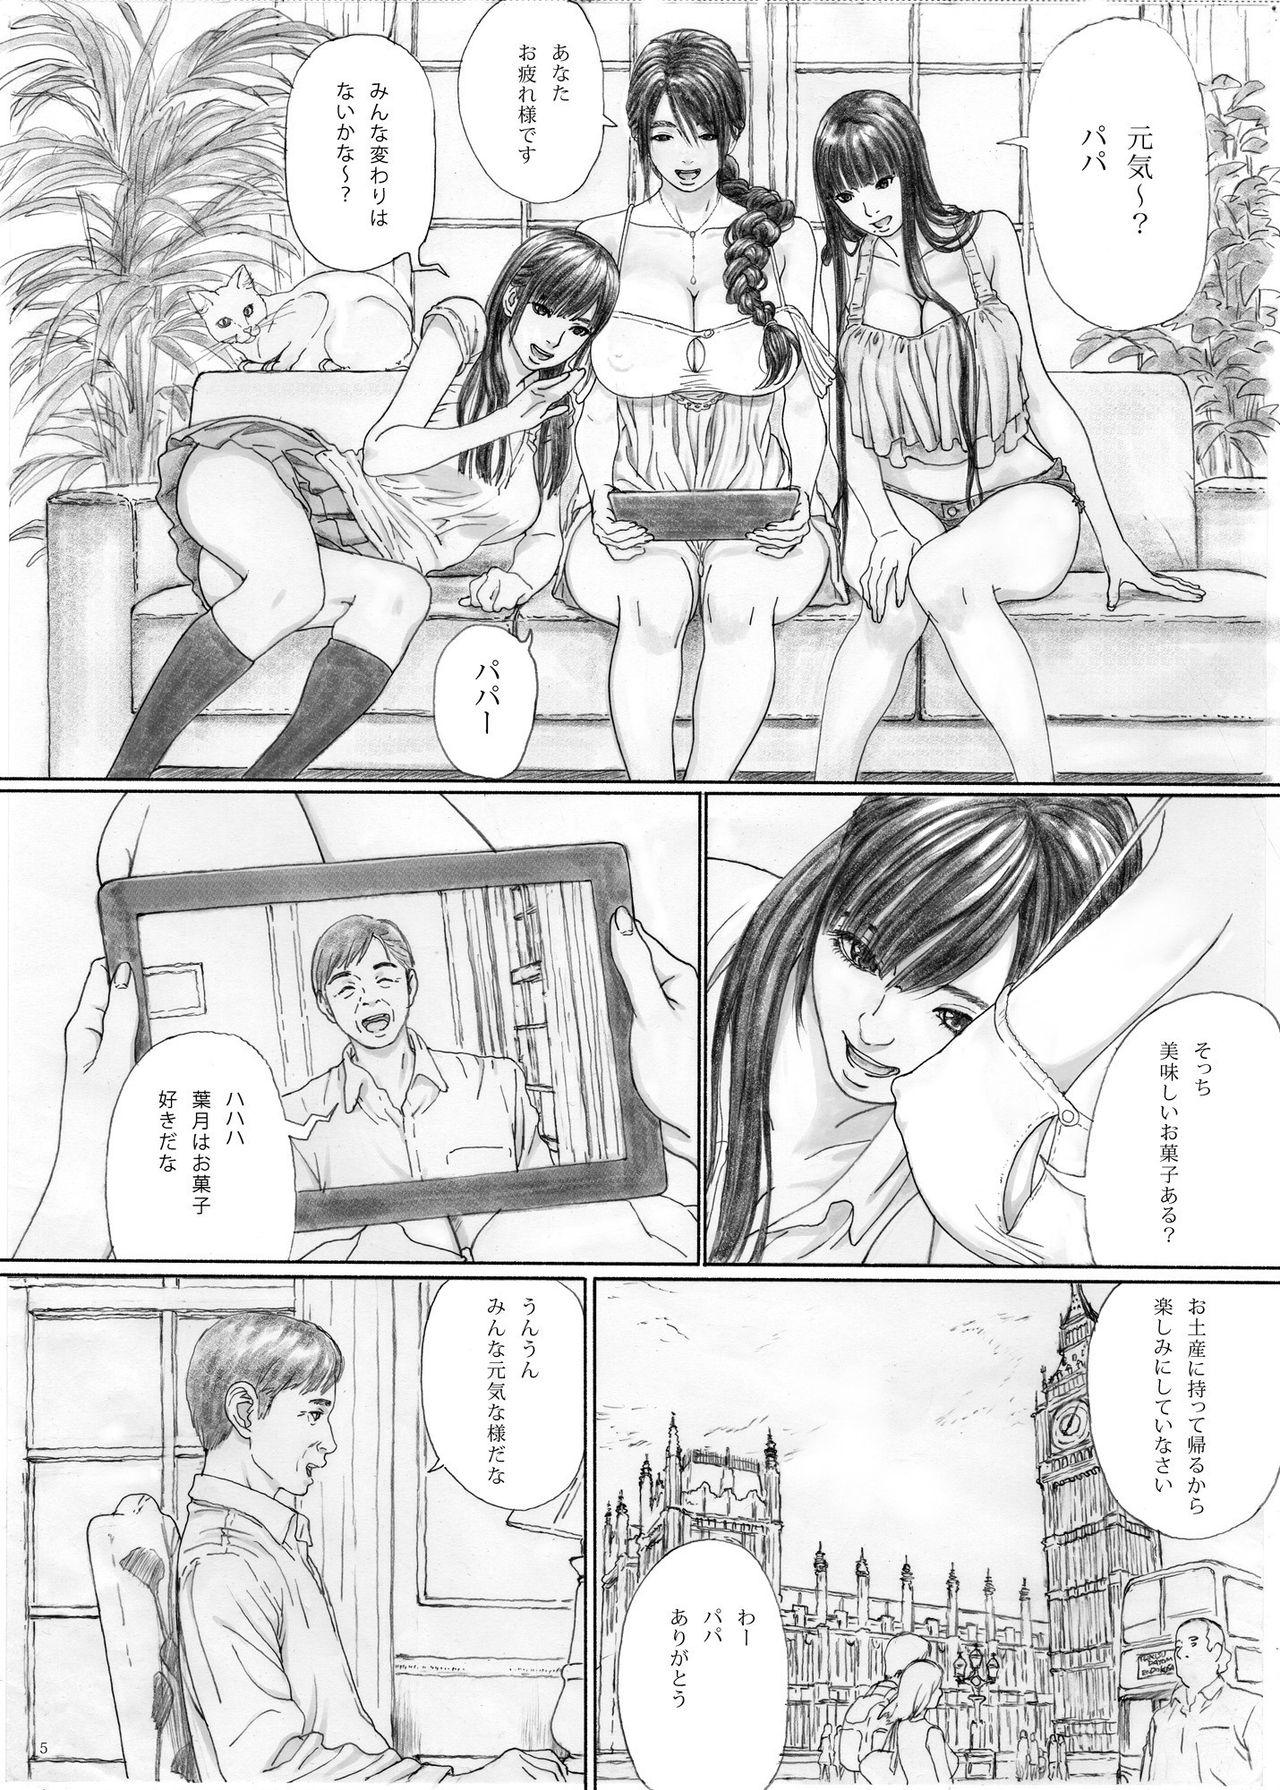 Tinder Inyoku no Sumika 1 - Original Strip - Page 4